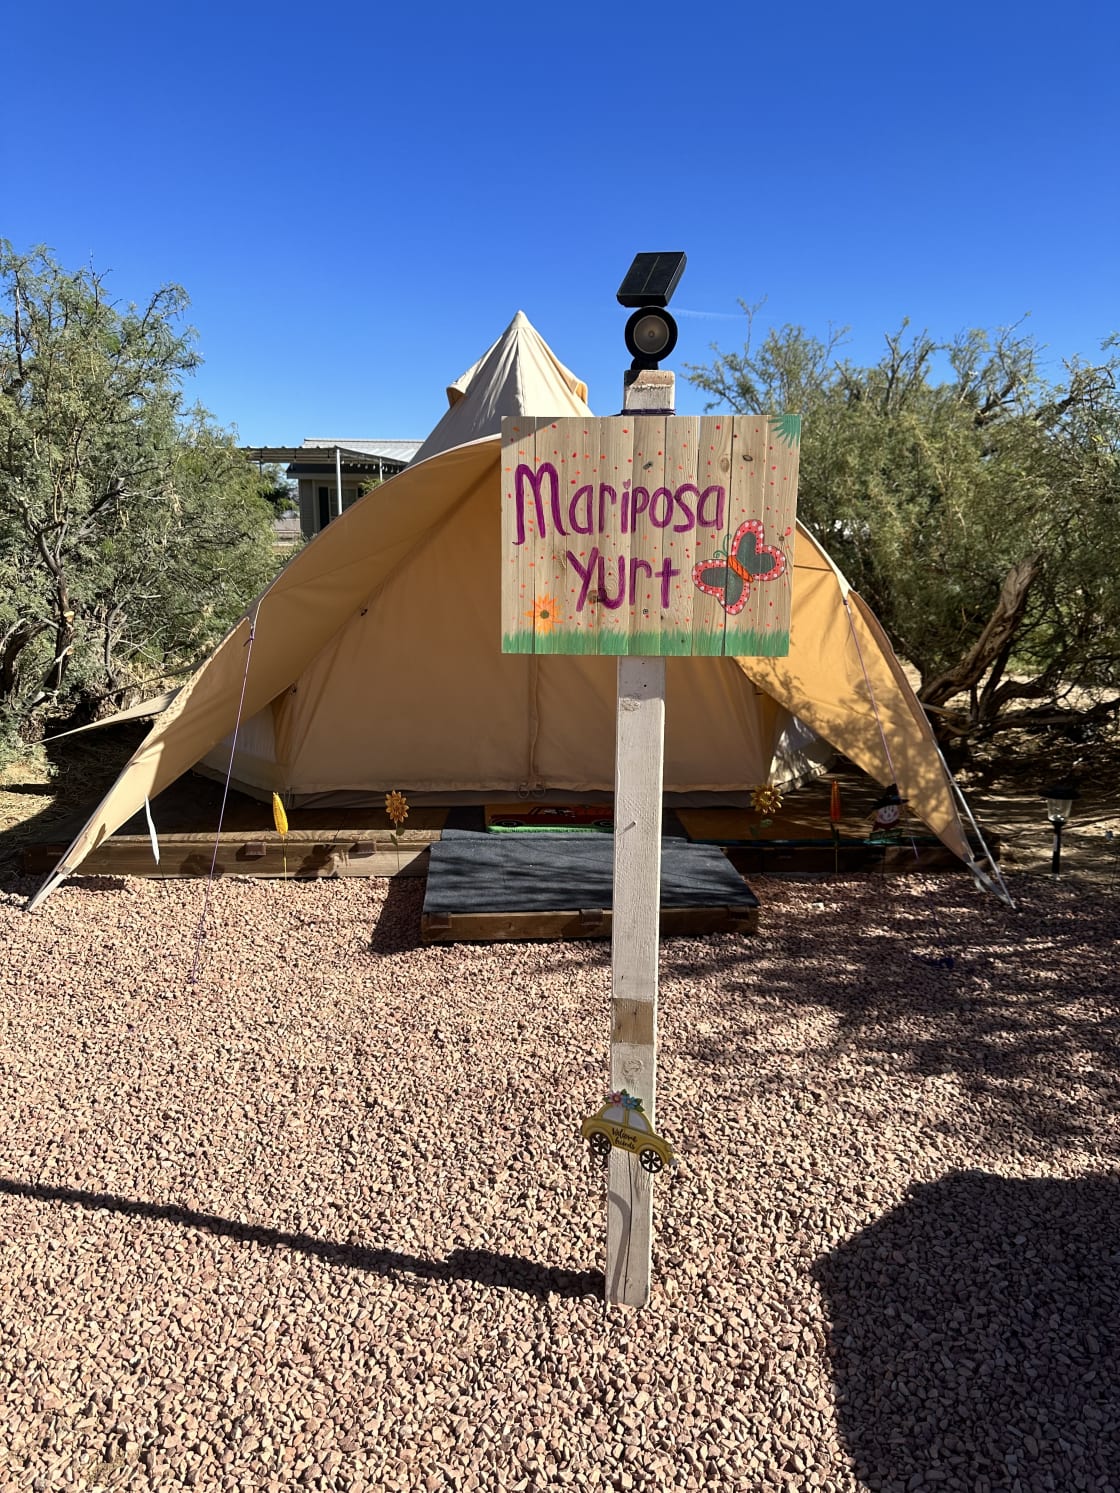 Mariposa Yurt / Near las vegas